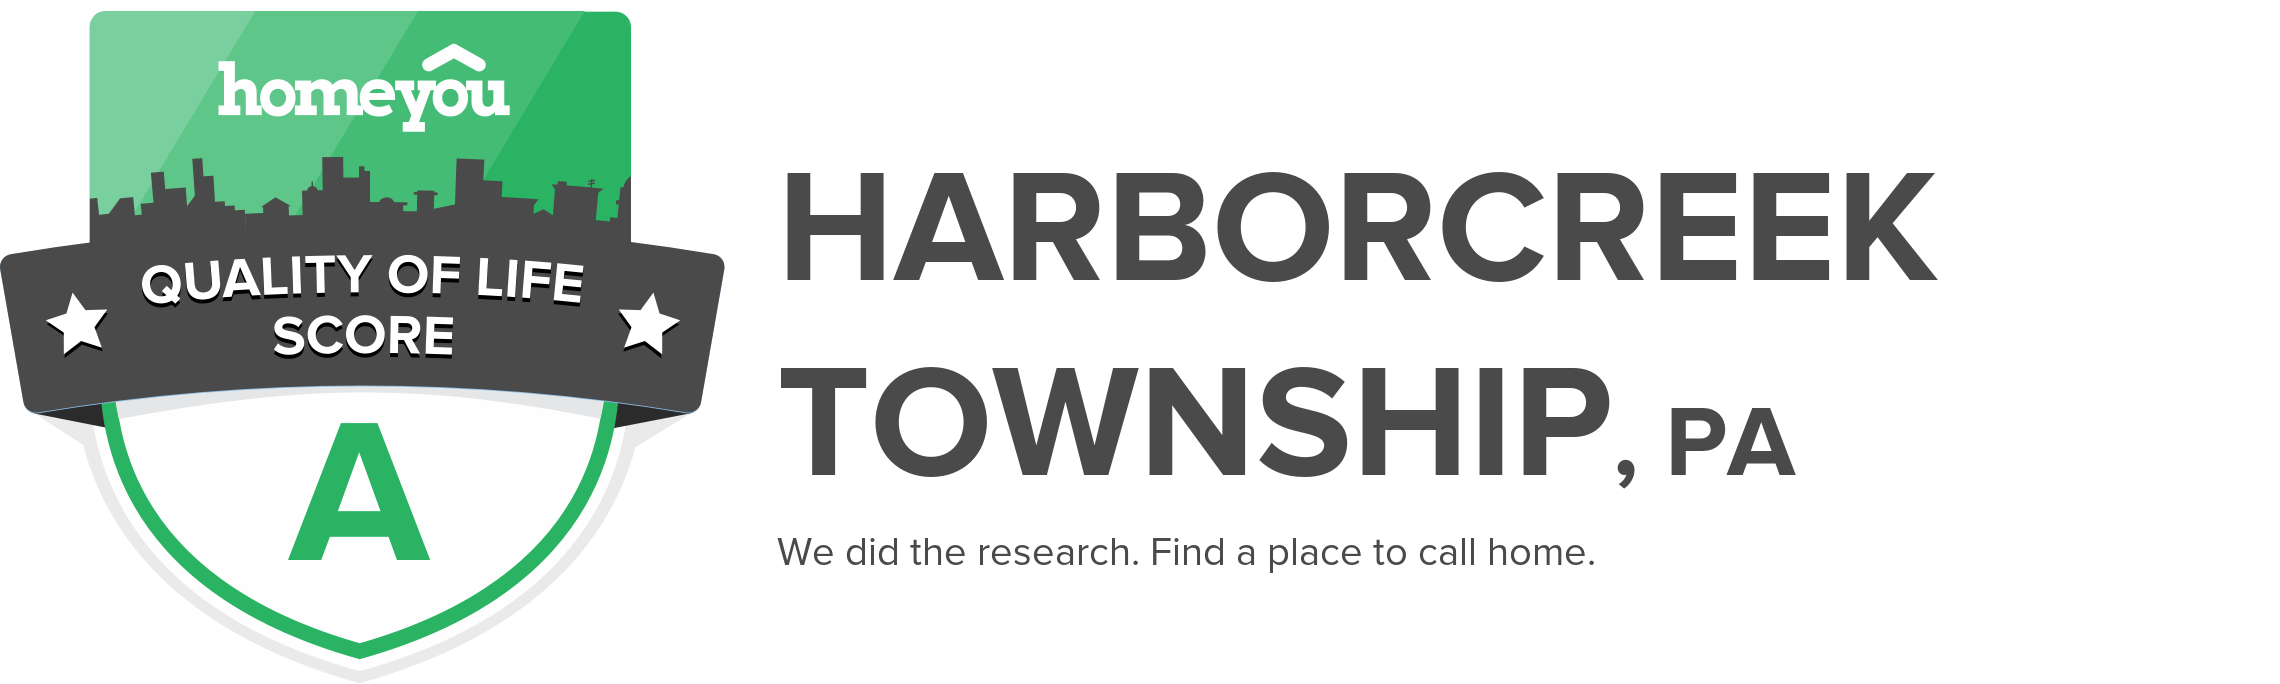 Harborcreek township, PA